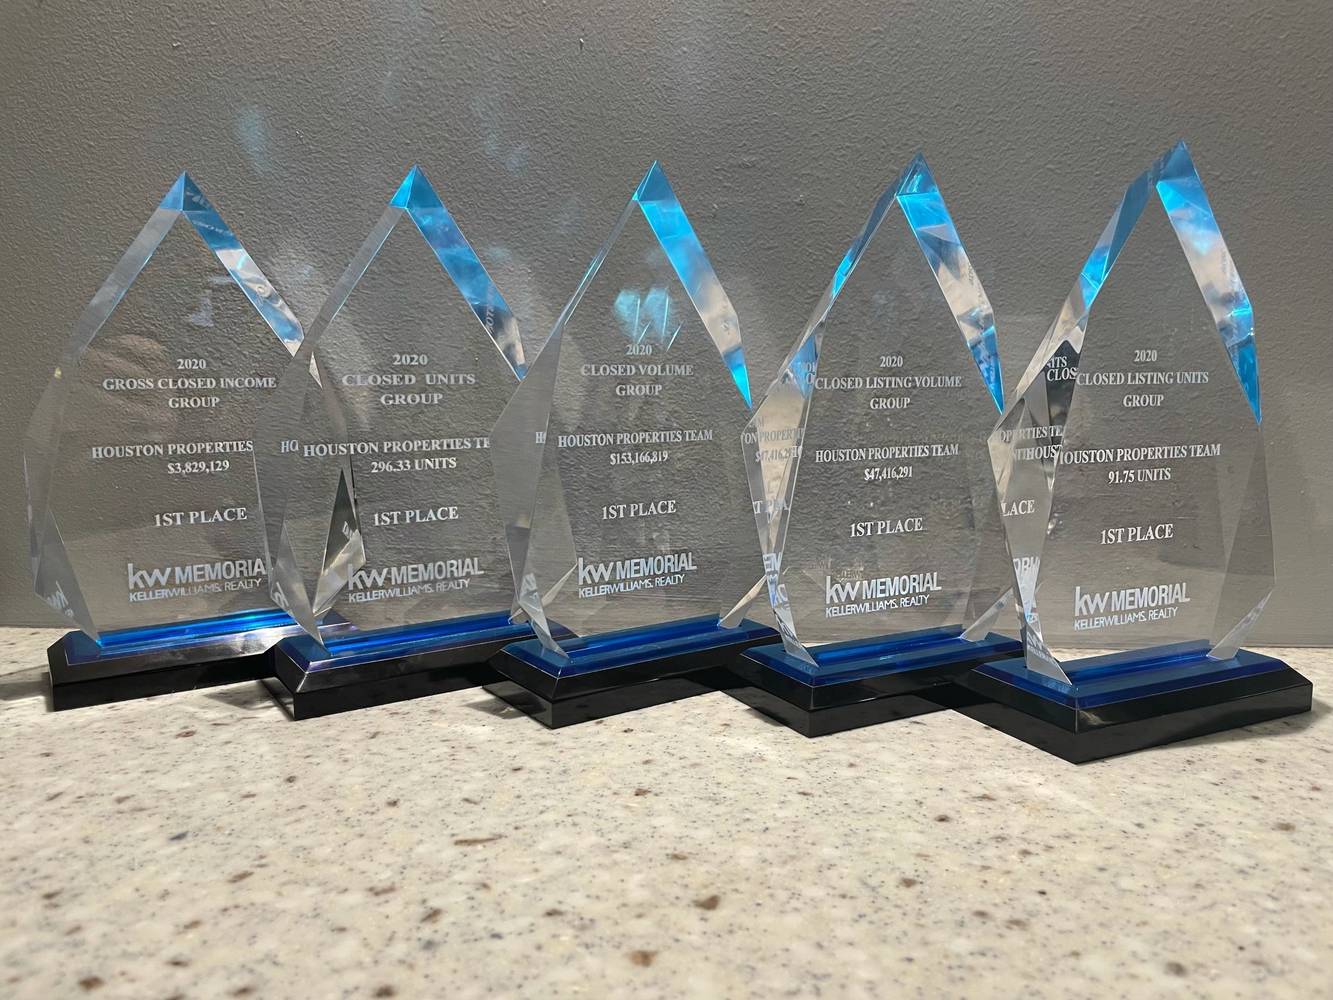 Houston Properties Team awards